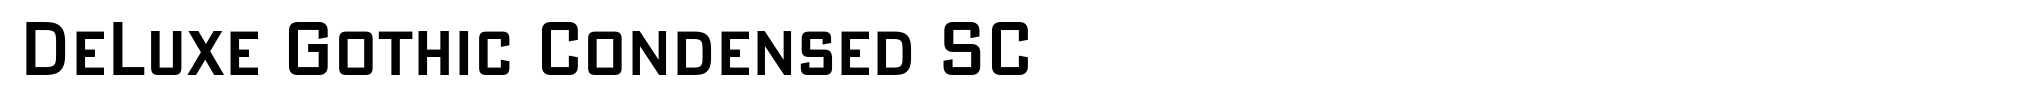 DeLuxe Gothic Condensed SC image